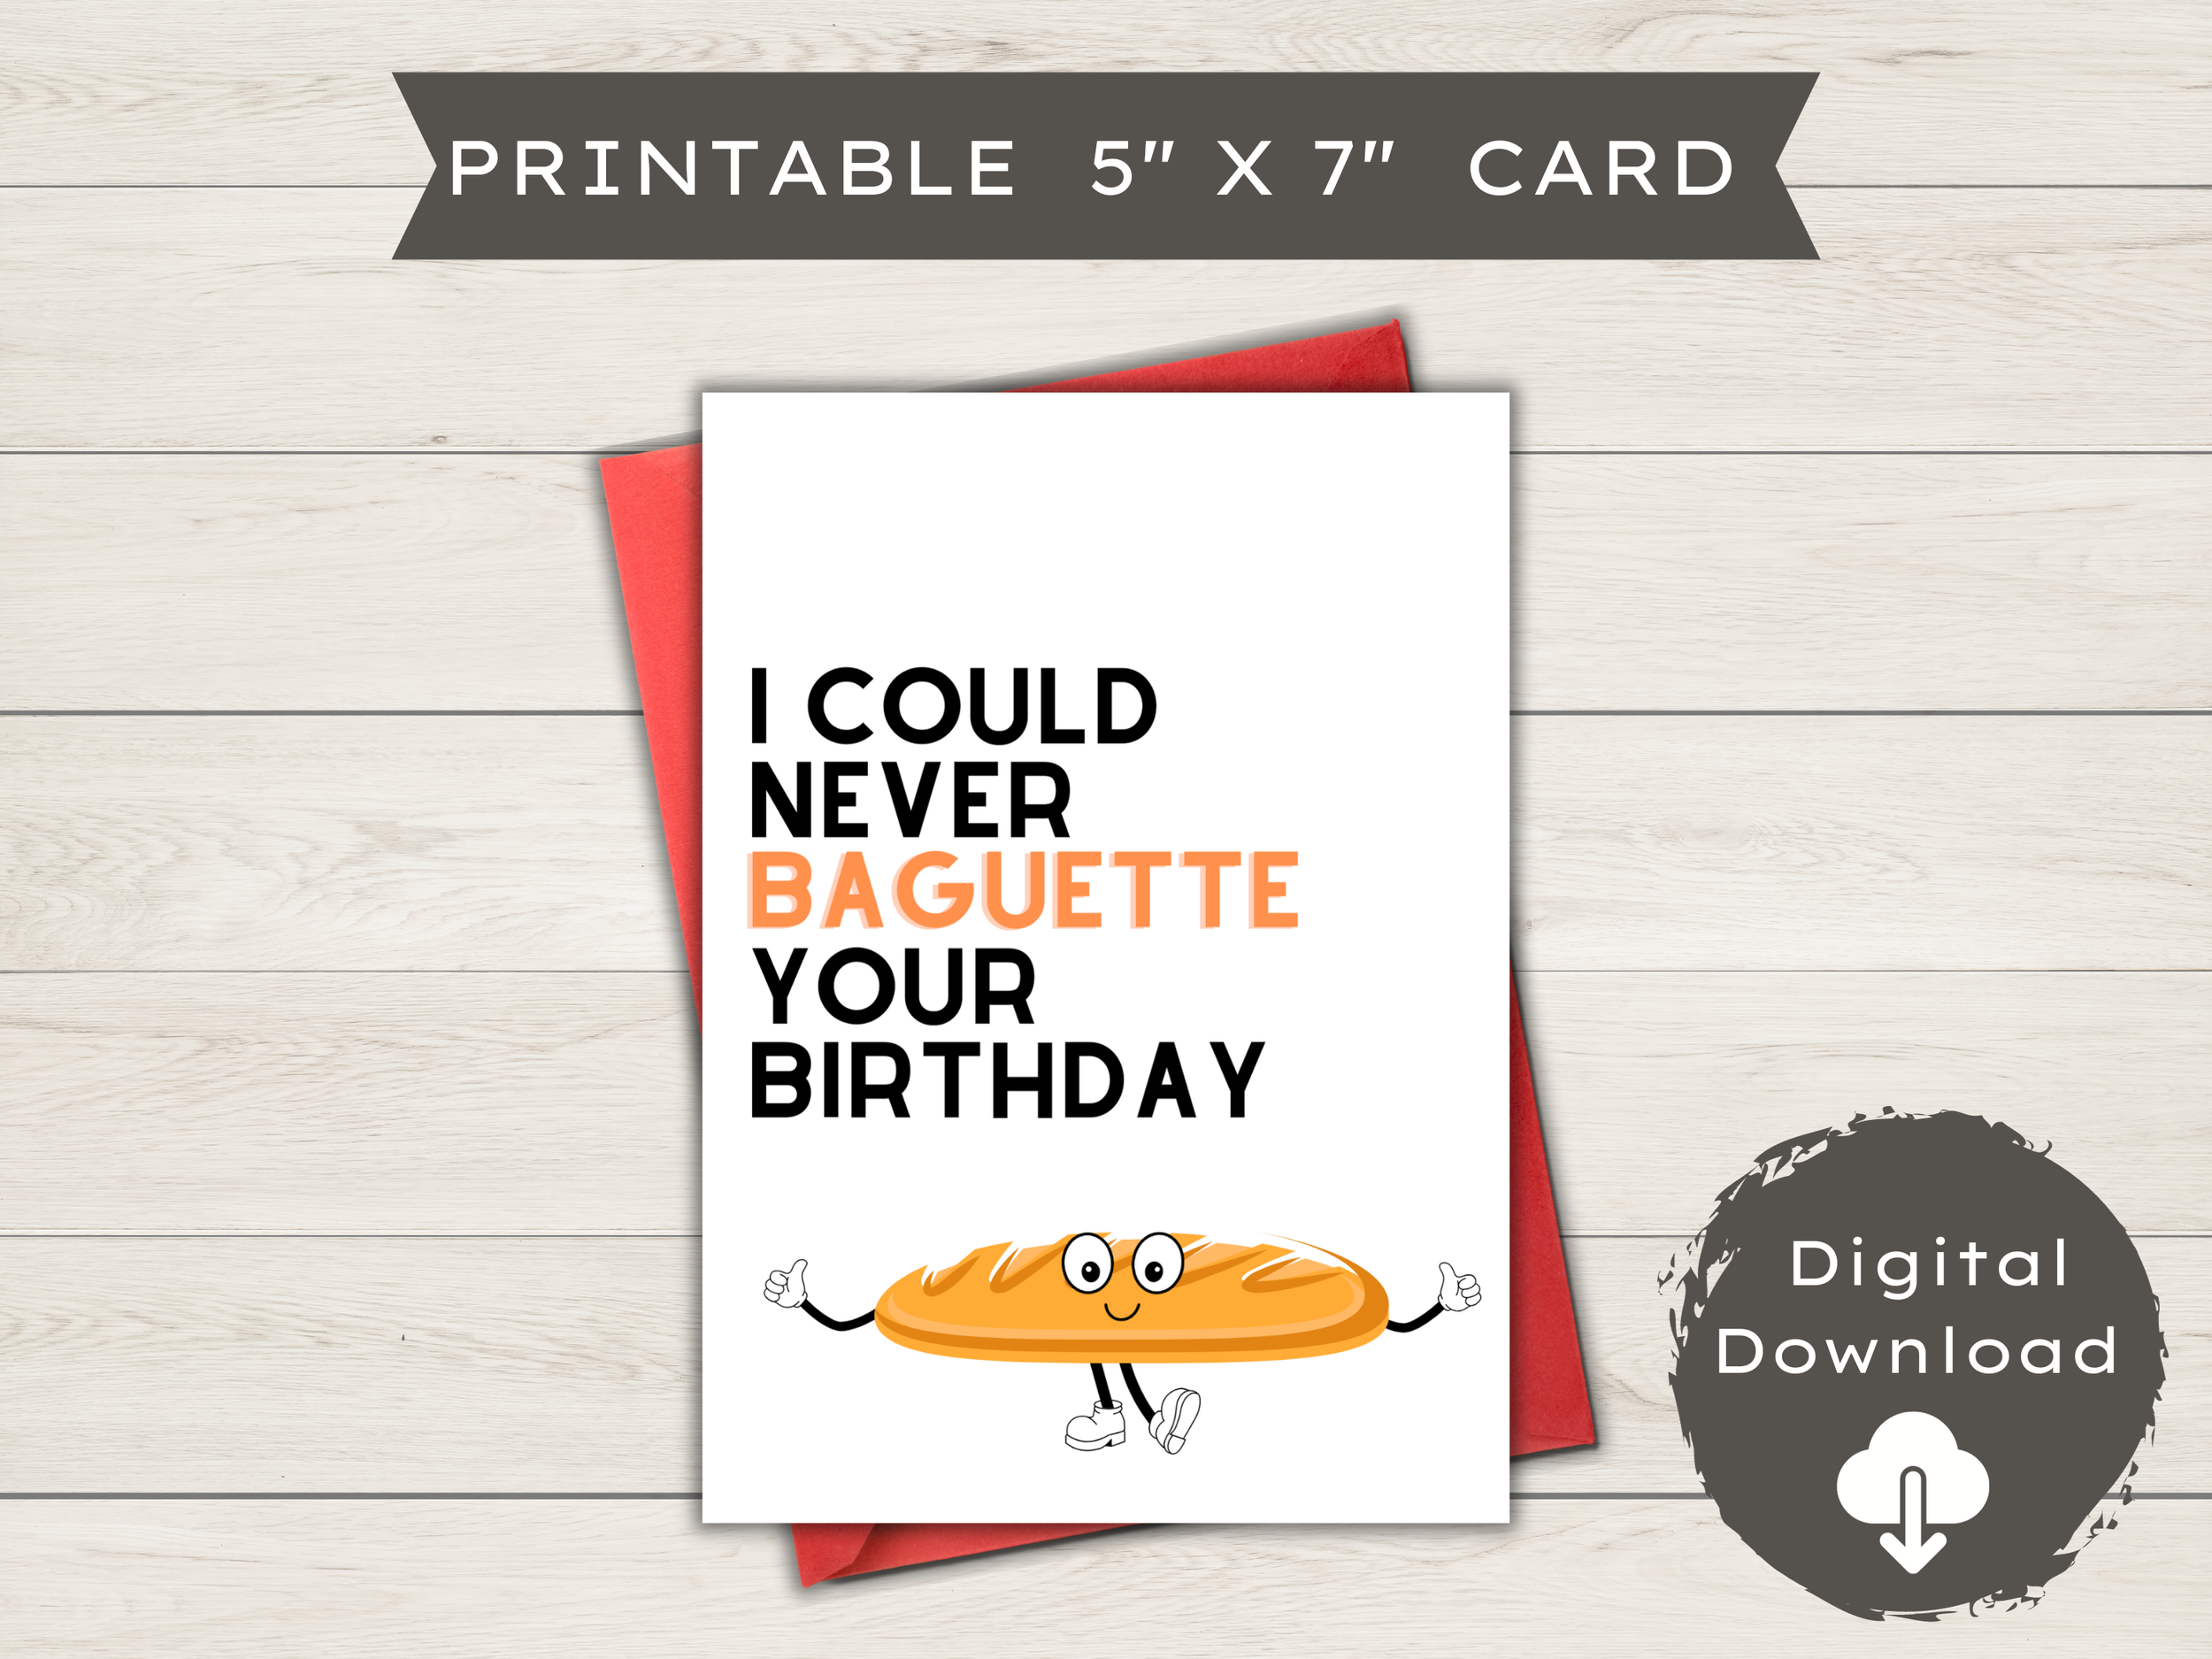 Printable Birthday Card - Blank Card - Baguette